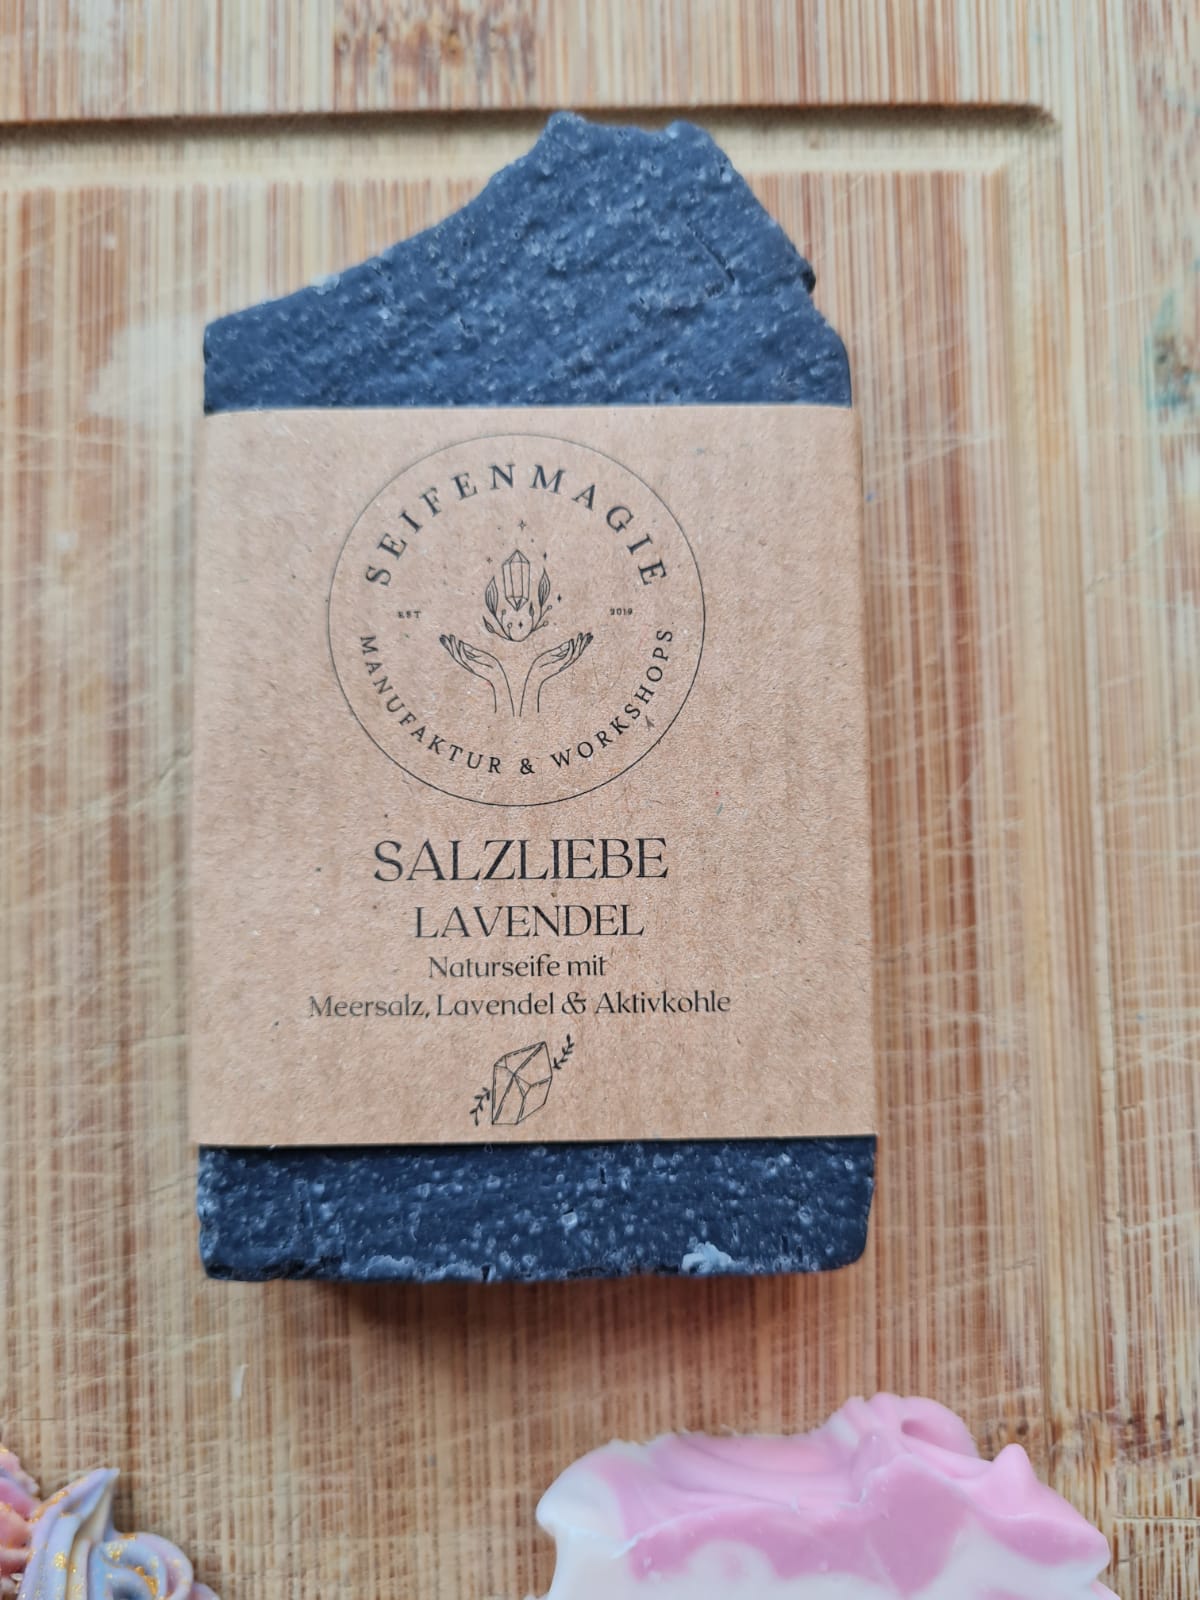 Salzliebe - Lavendel, Aktivkohle & Meersalz| Seifenmagie | Naturseife